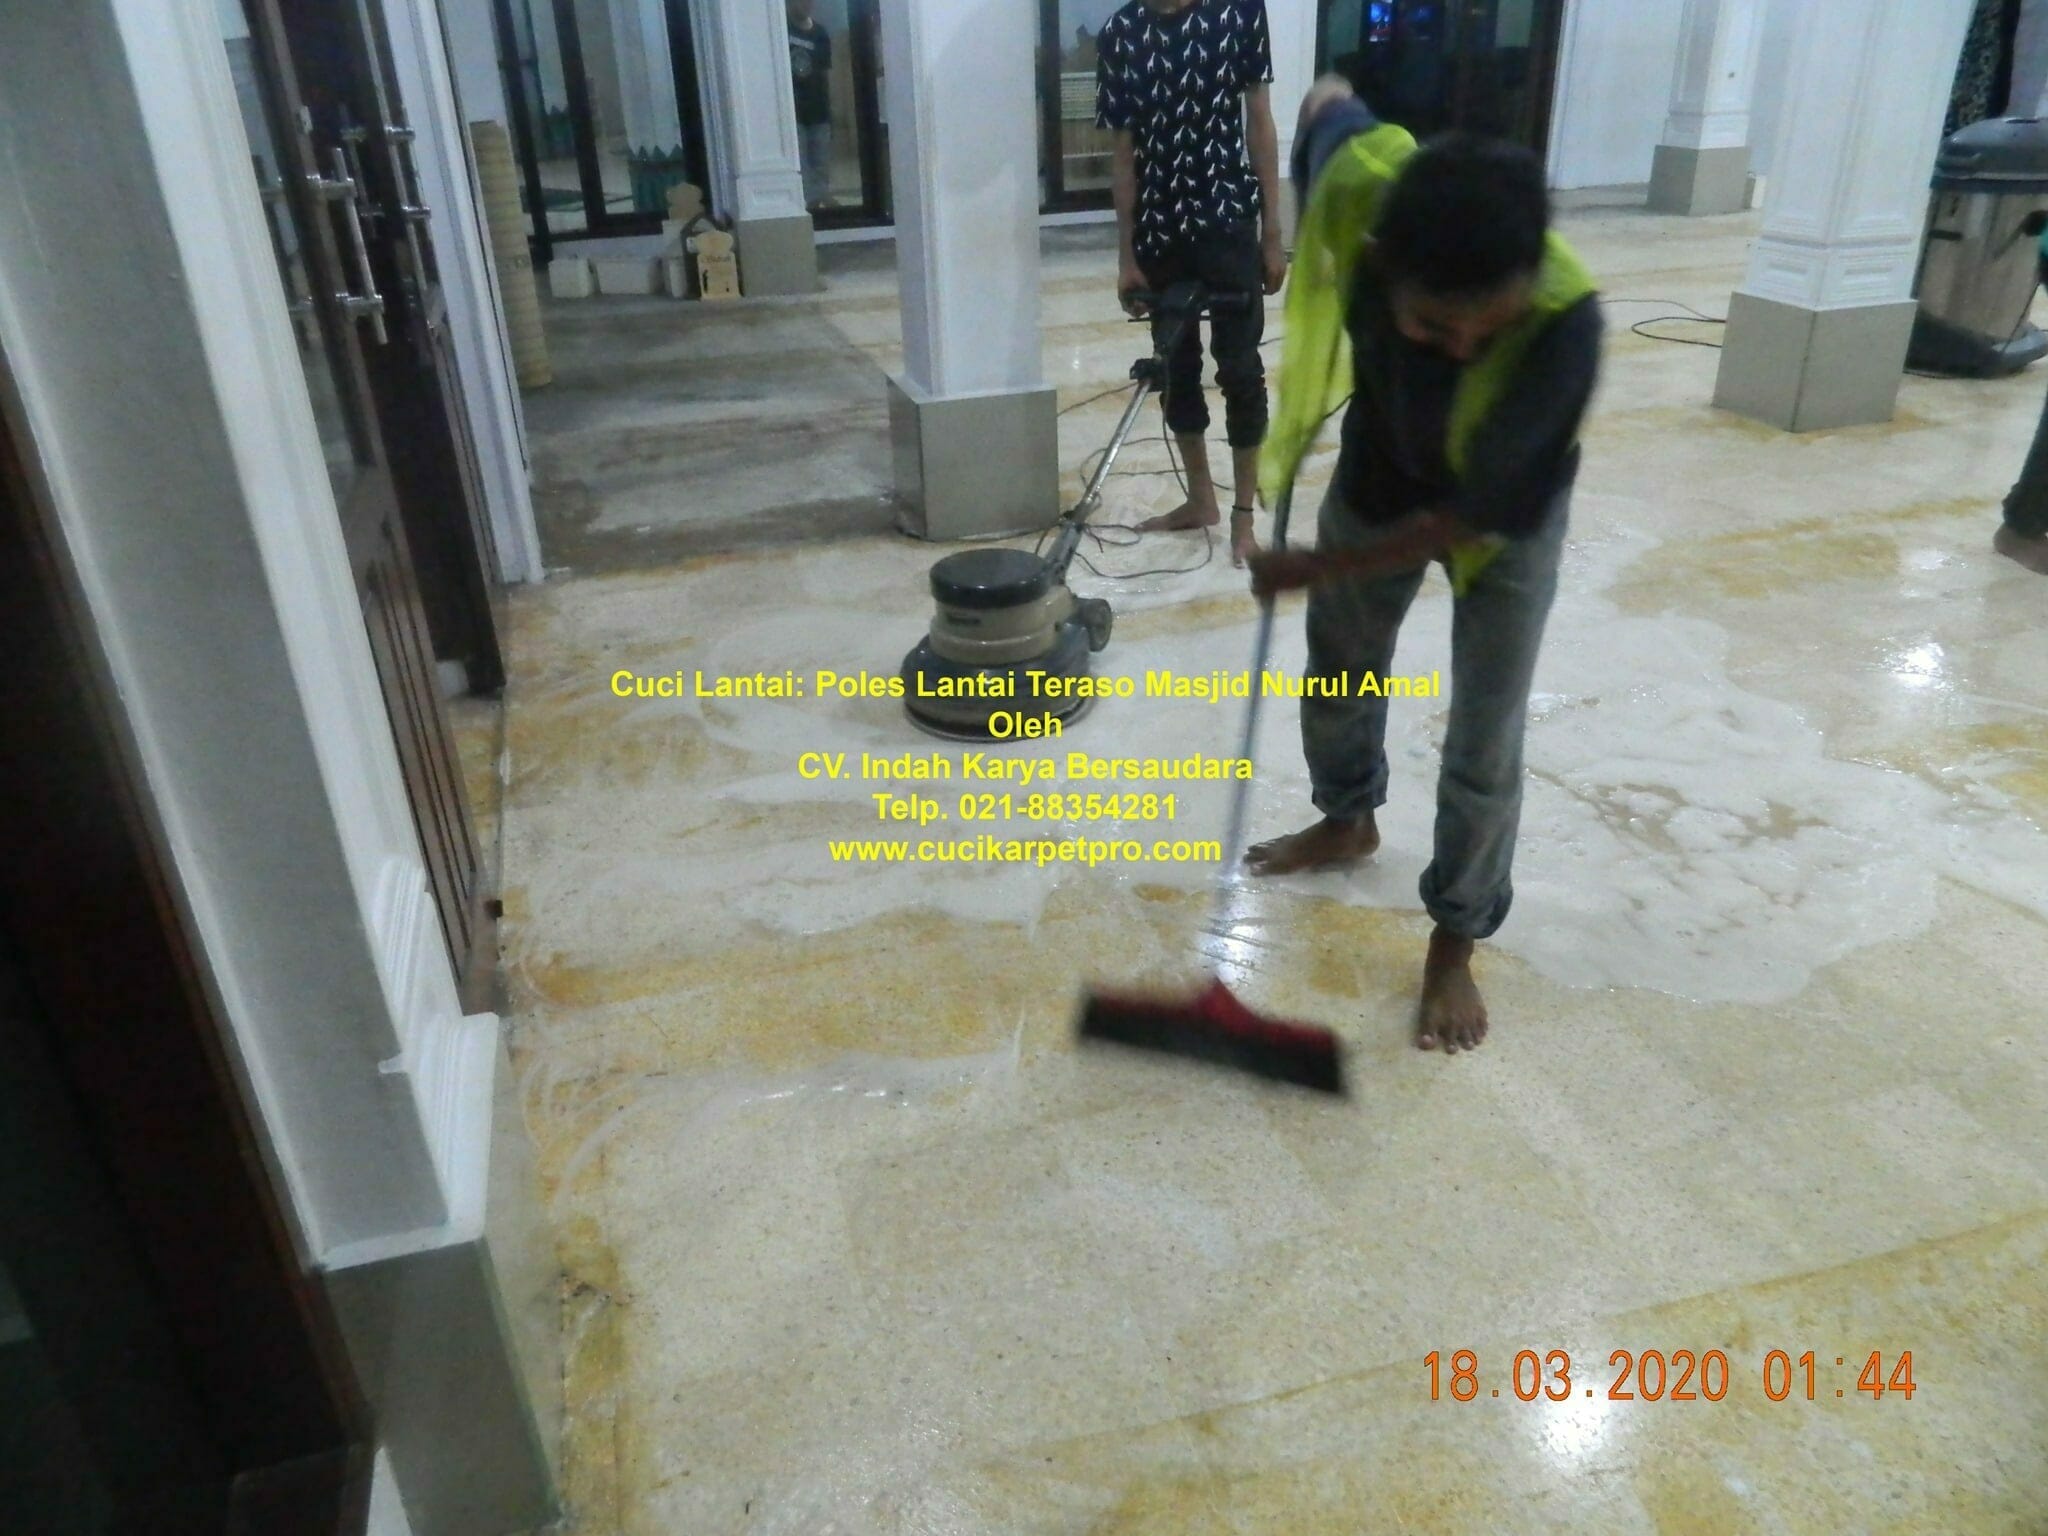 cuci lantai poles lantai teraso masjid nurul amal 09